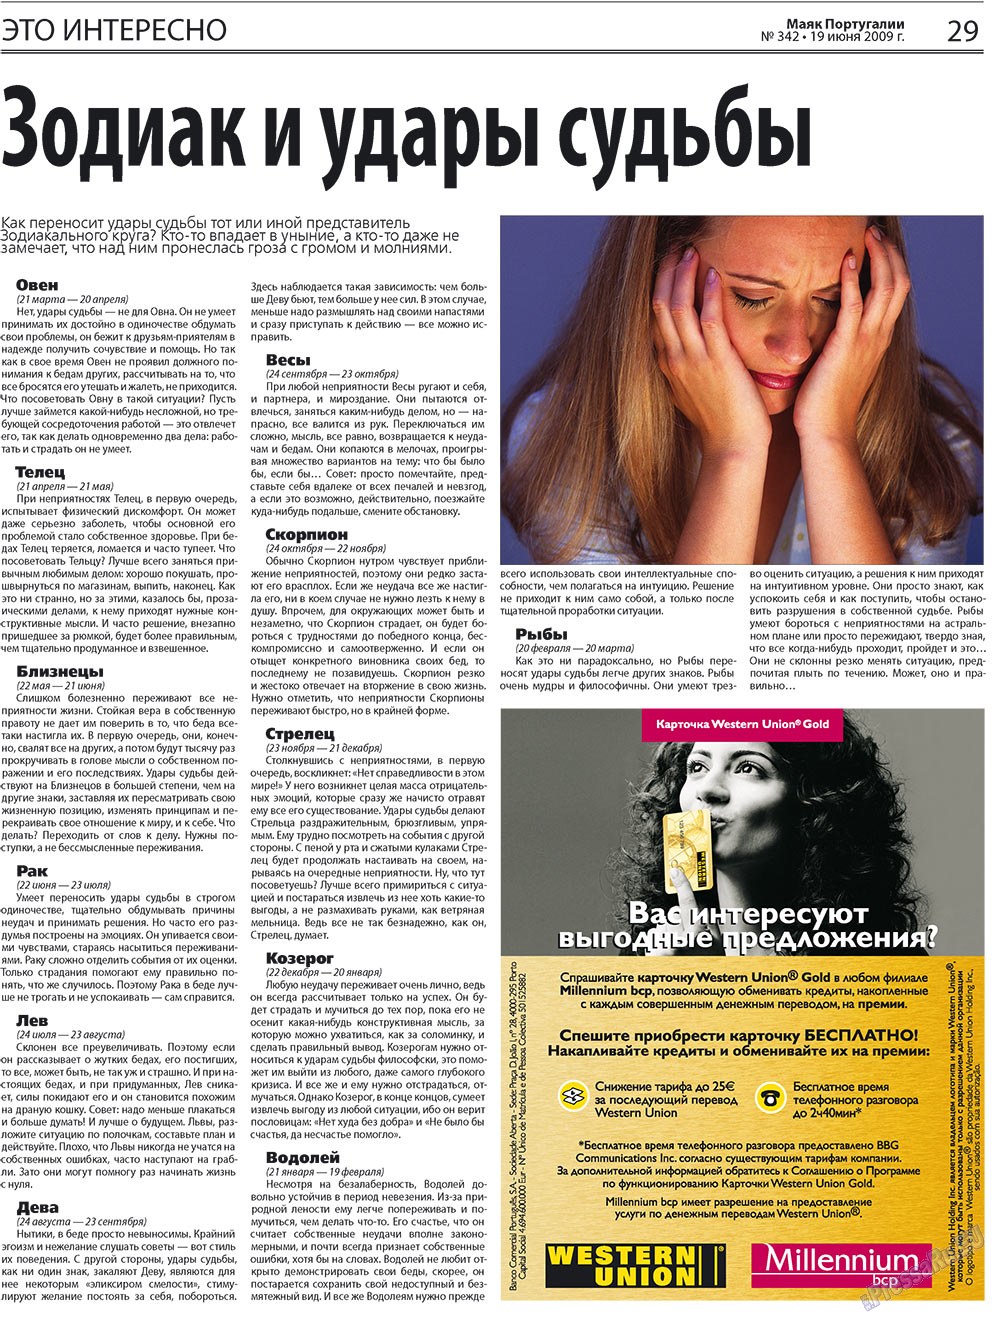 Маяк Португалии, газета. 2009 №24 стр.29